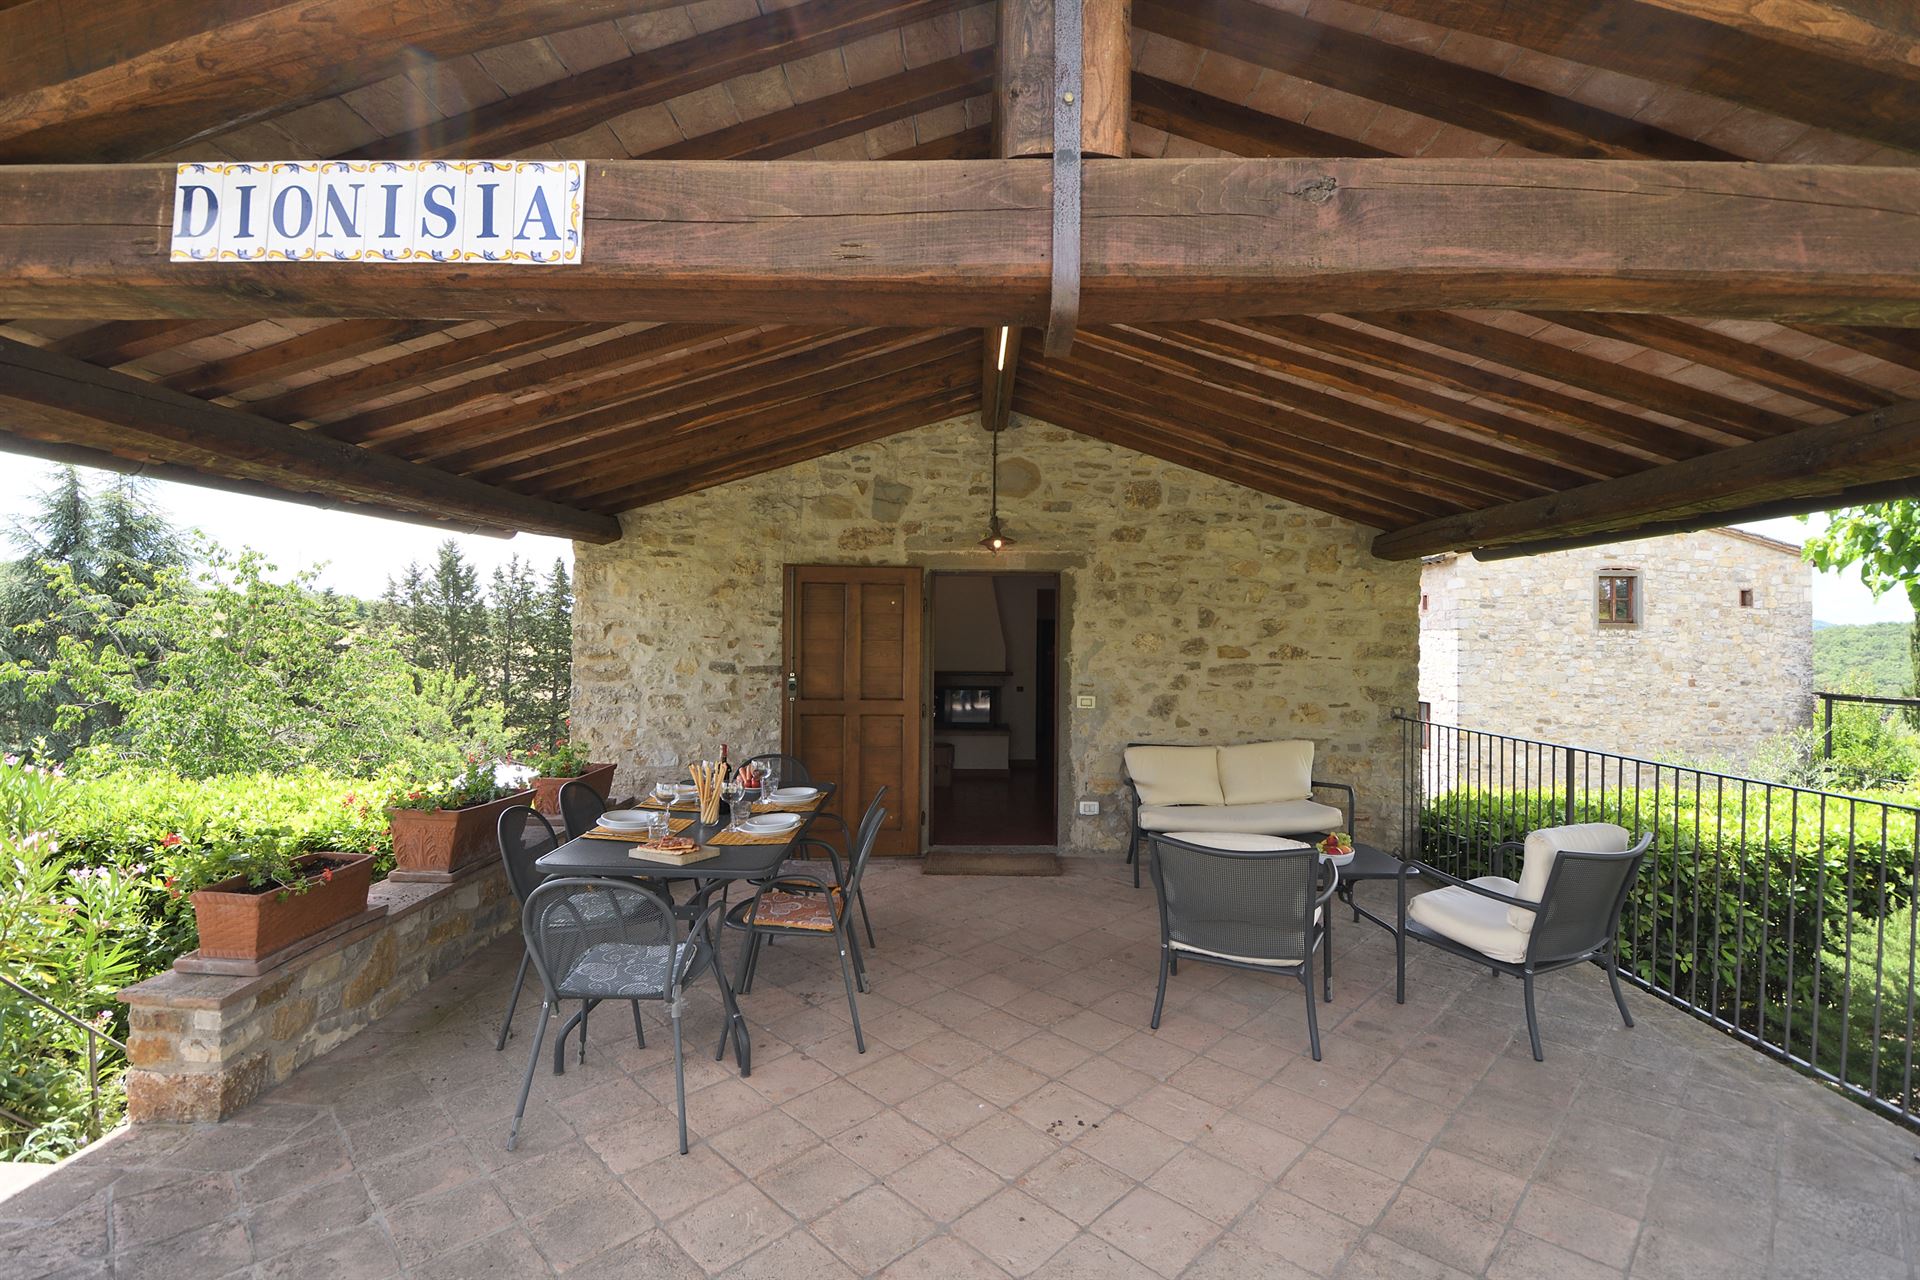 Tuscany Villa Dionisia - Capannole - Rental in Gaiole in Chianti - Siena  and Chianti - Tuscany